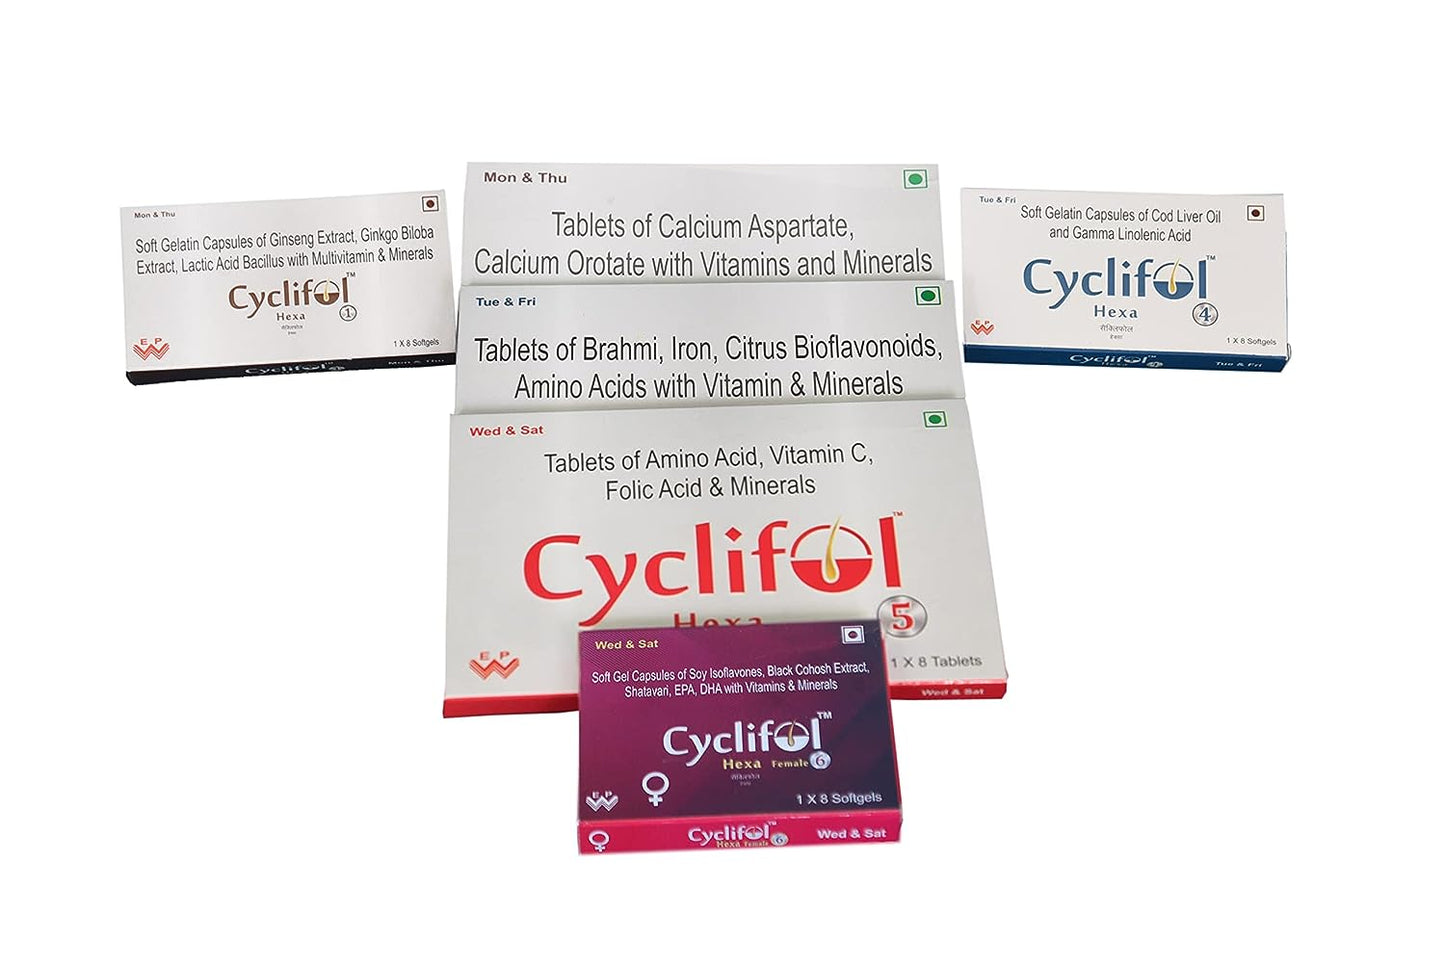 Cyclifol Hexa Female Kit